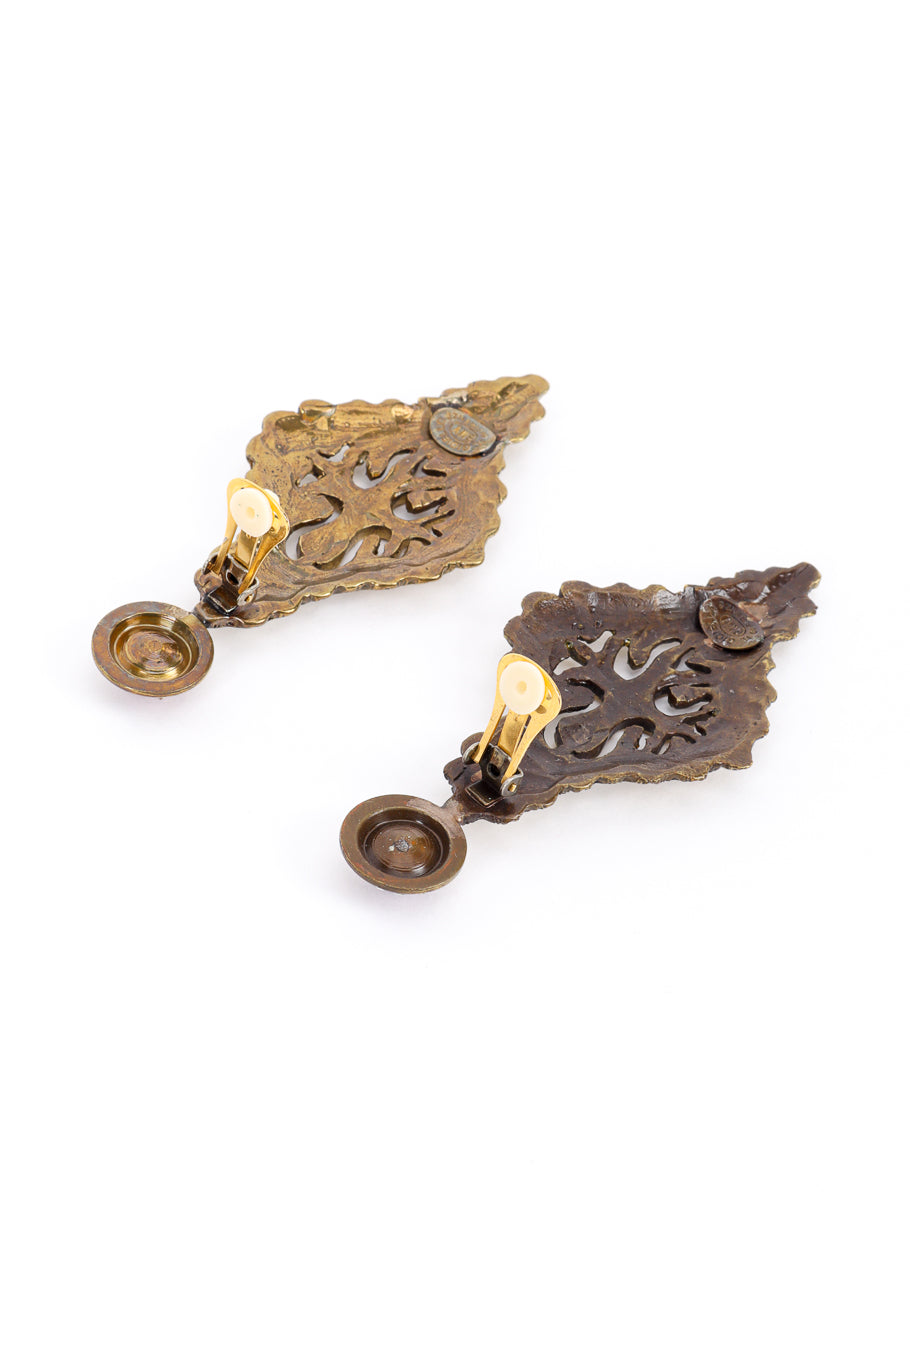 Vintage Il Gioiello Organic Plate Earrings back clips unhinged @recess la